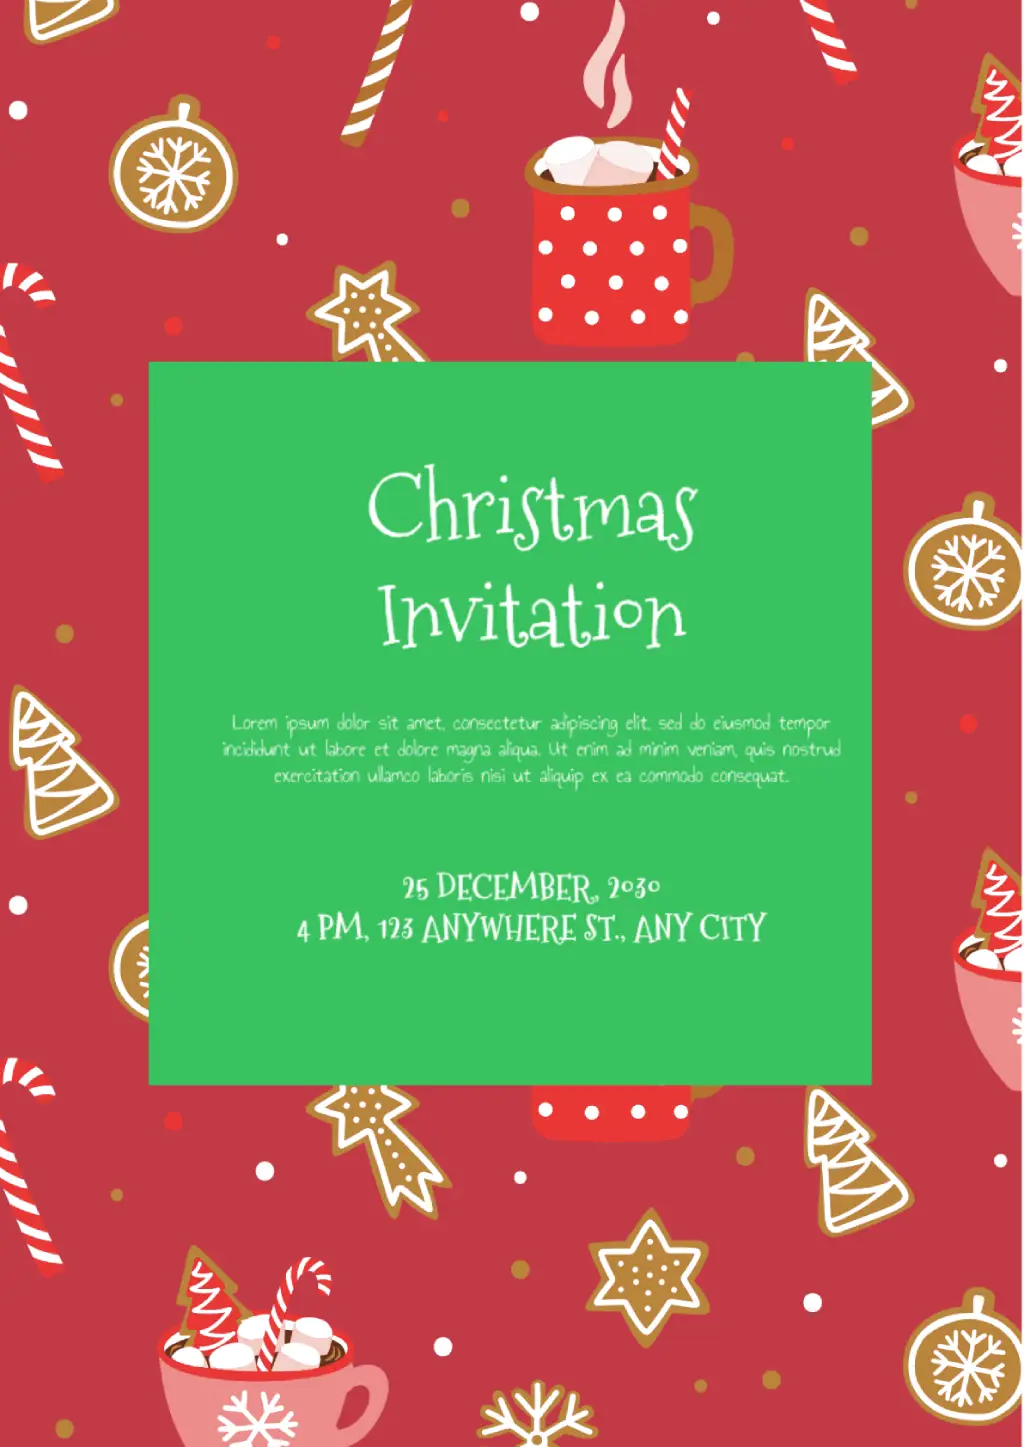 Christmas Invitation Template for Google Docs